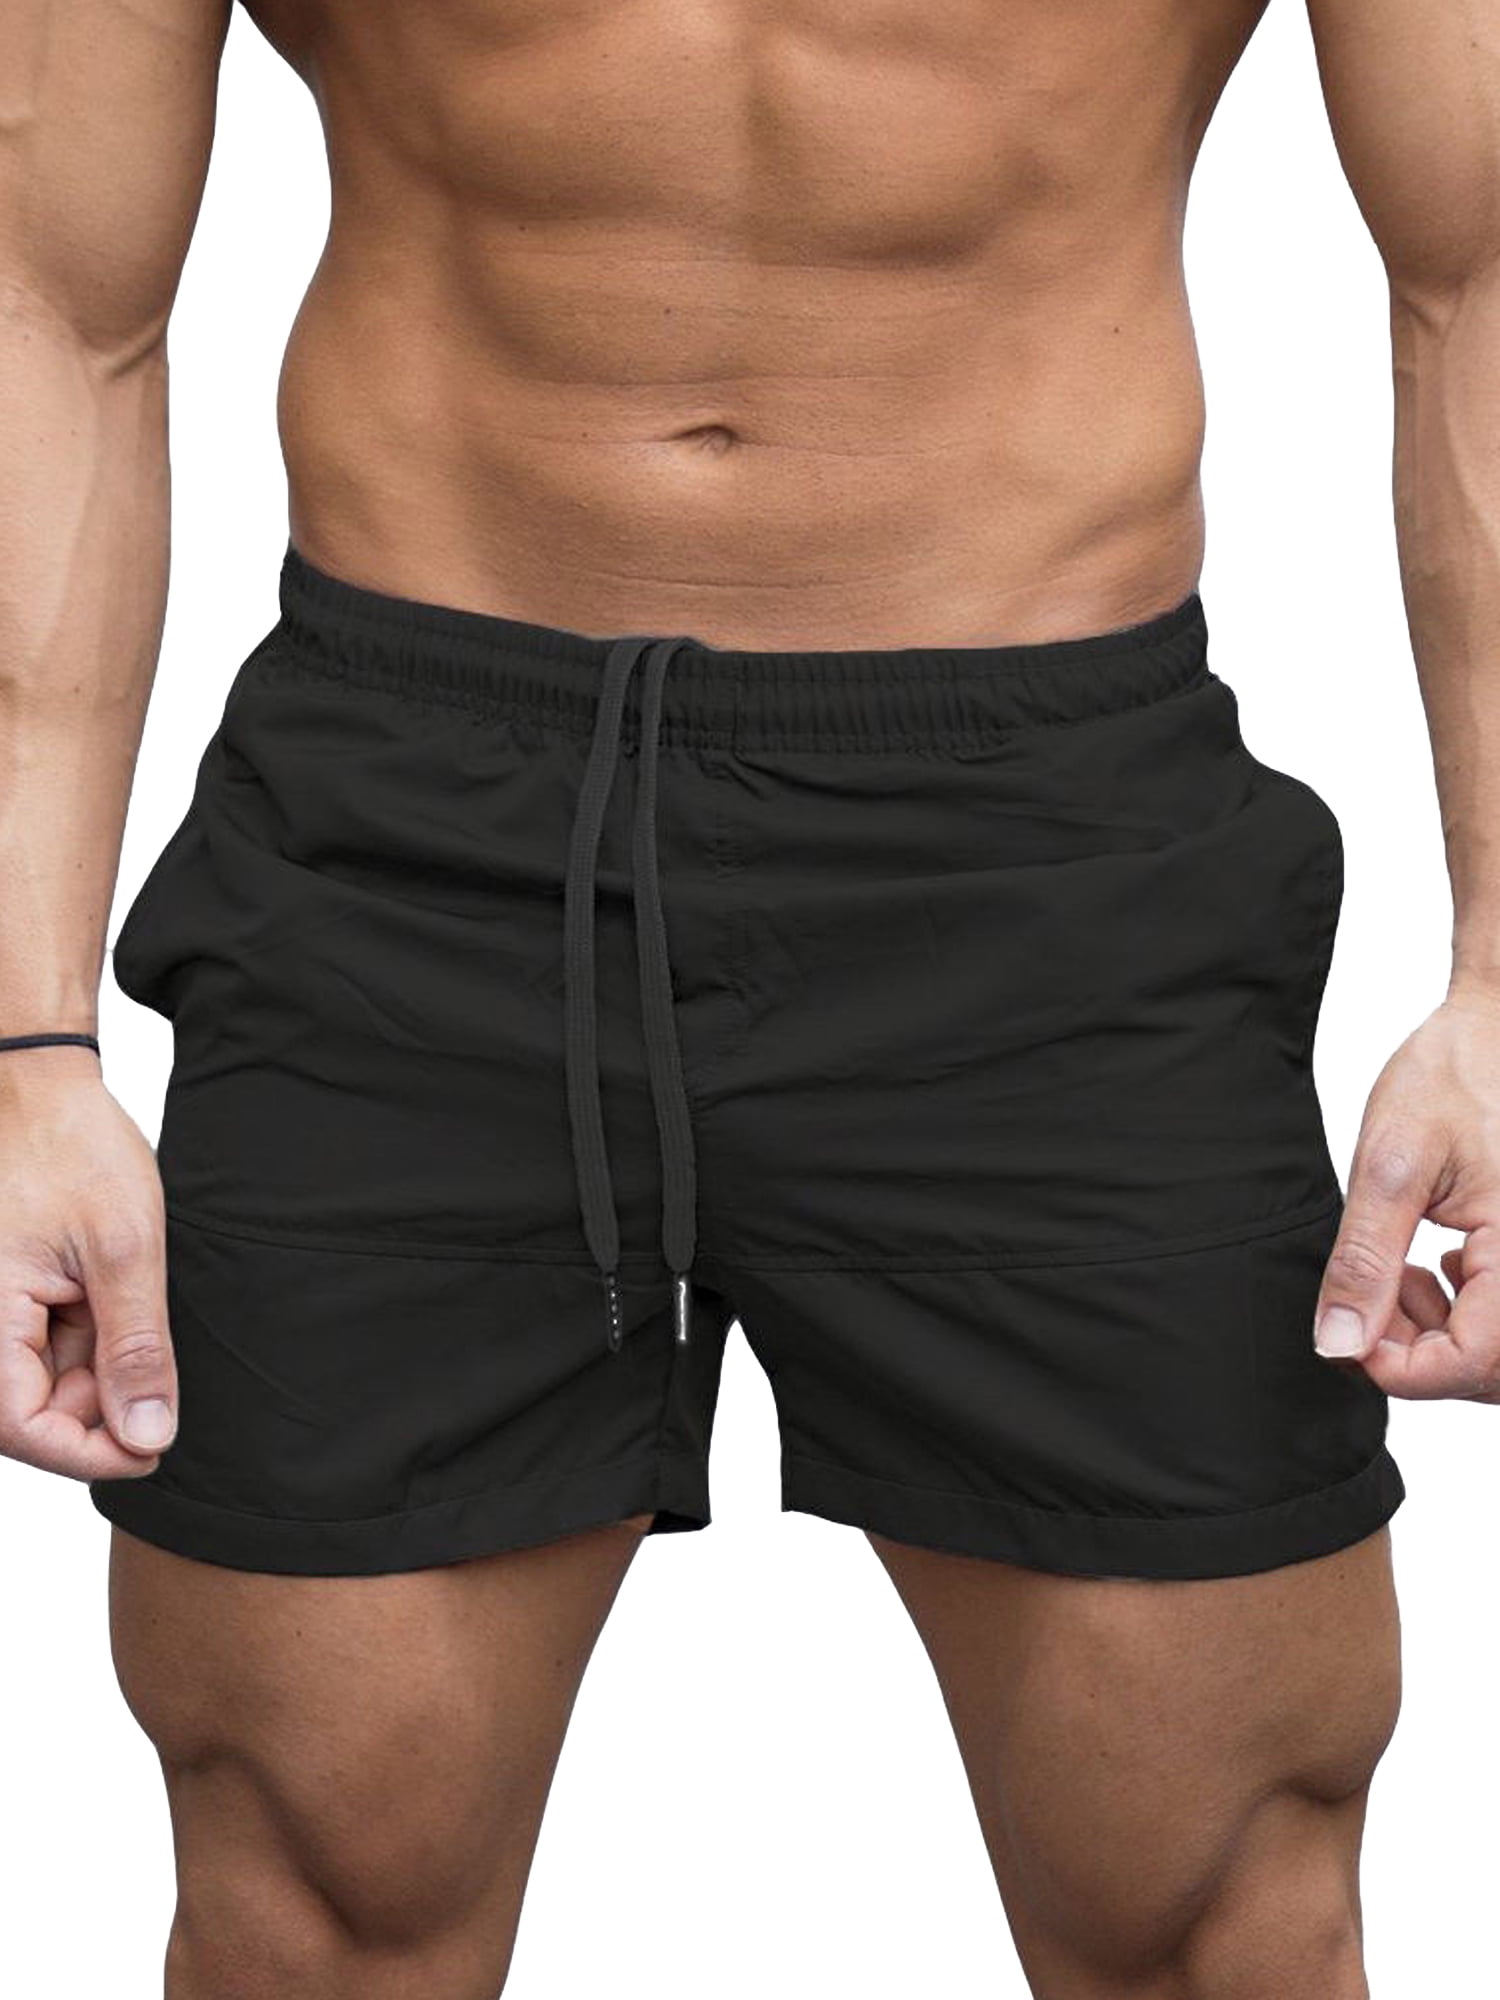 MERSARIPHY Men Solid Color Elastic Waist Sport Workout Gym Shorts Pants ...